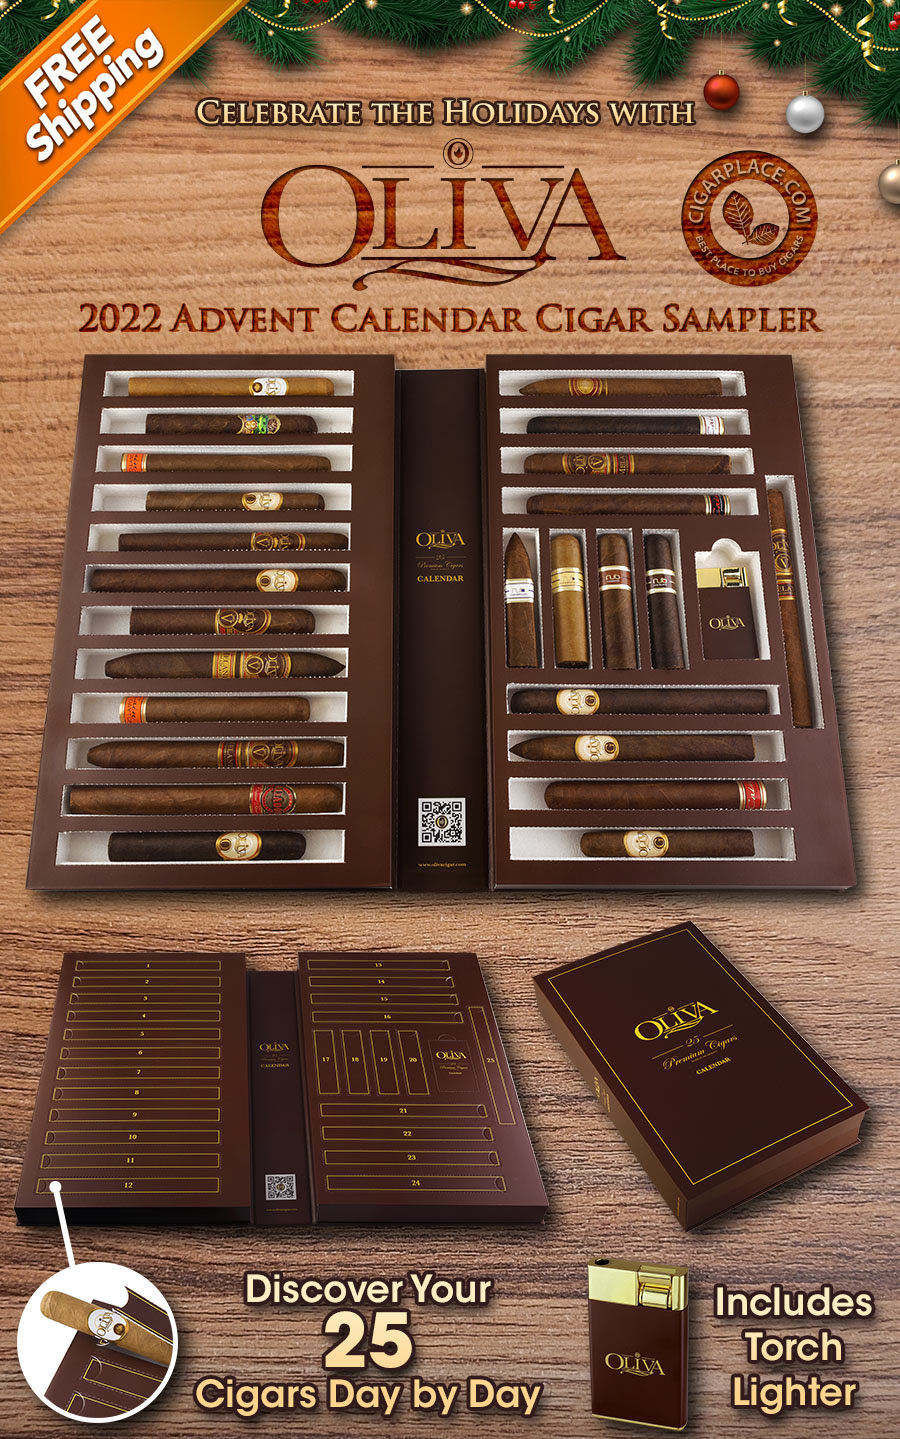 holiday-gift-idea-the-oliva-cigar-2022-holiday-countdown-calendar-sampler